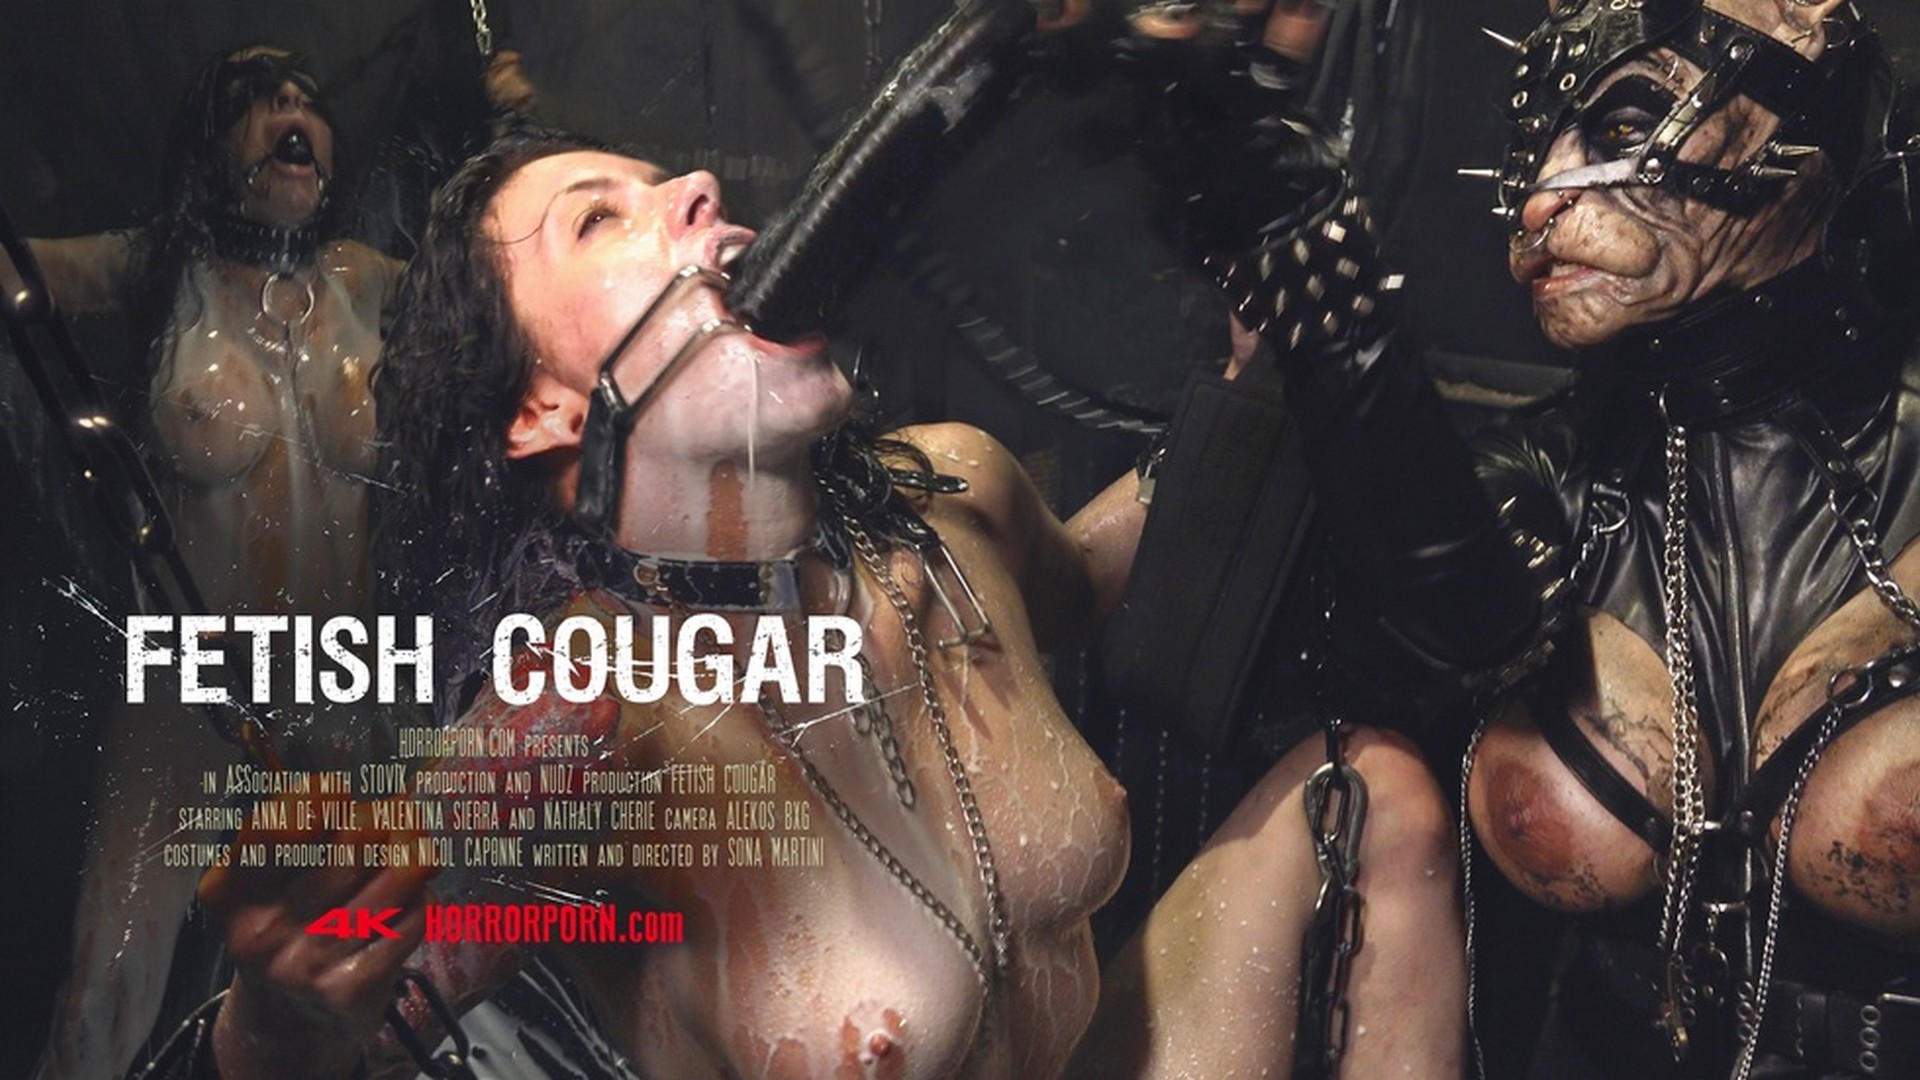 Fetish Cougar_cover.jpg